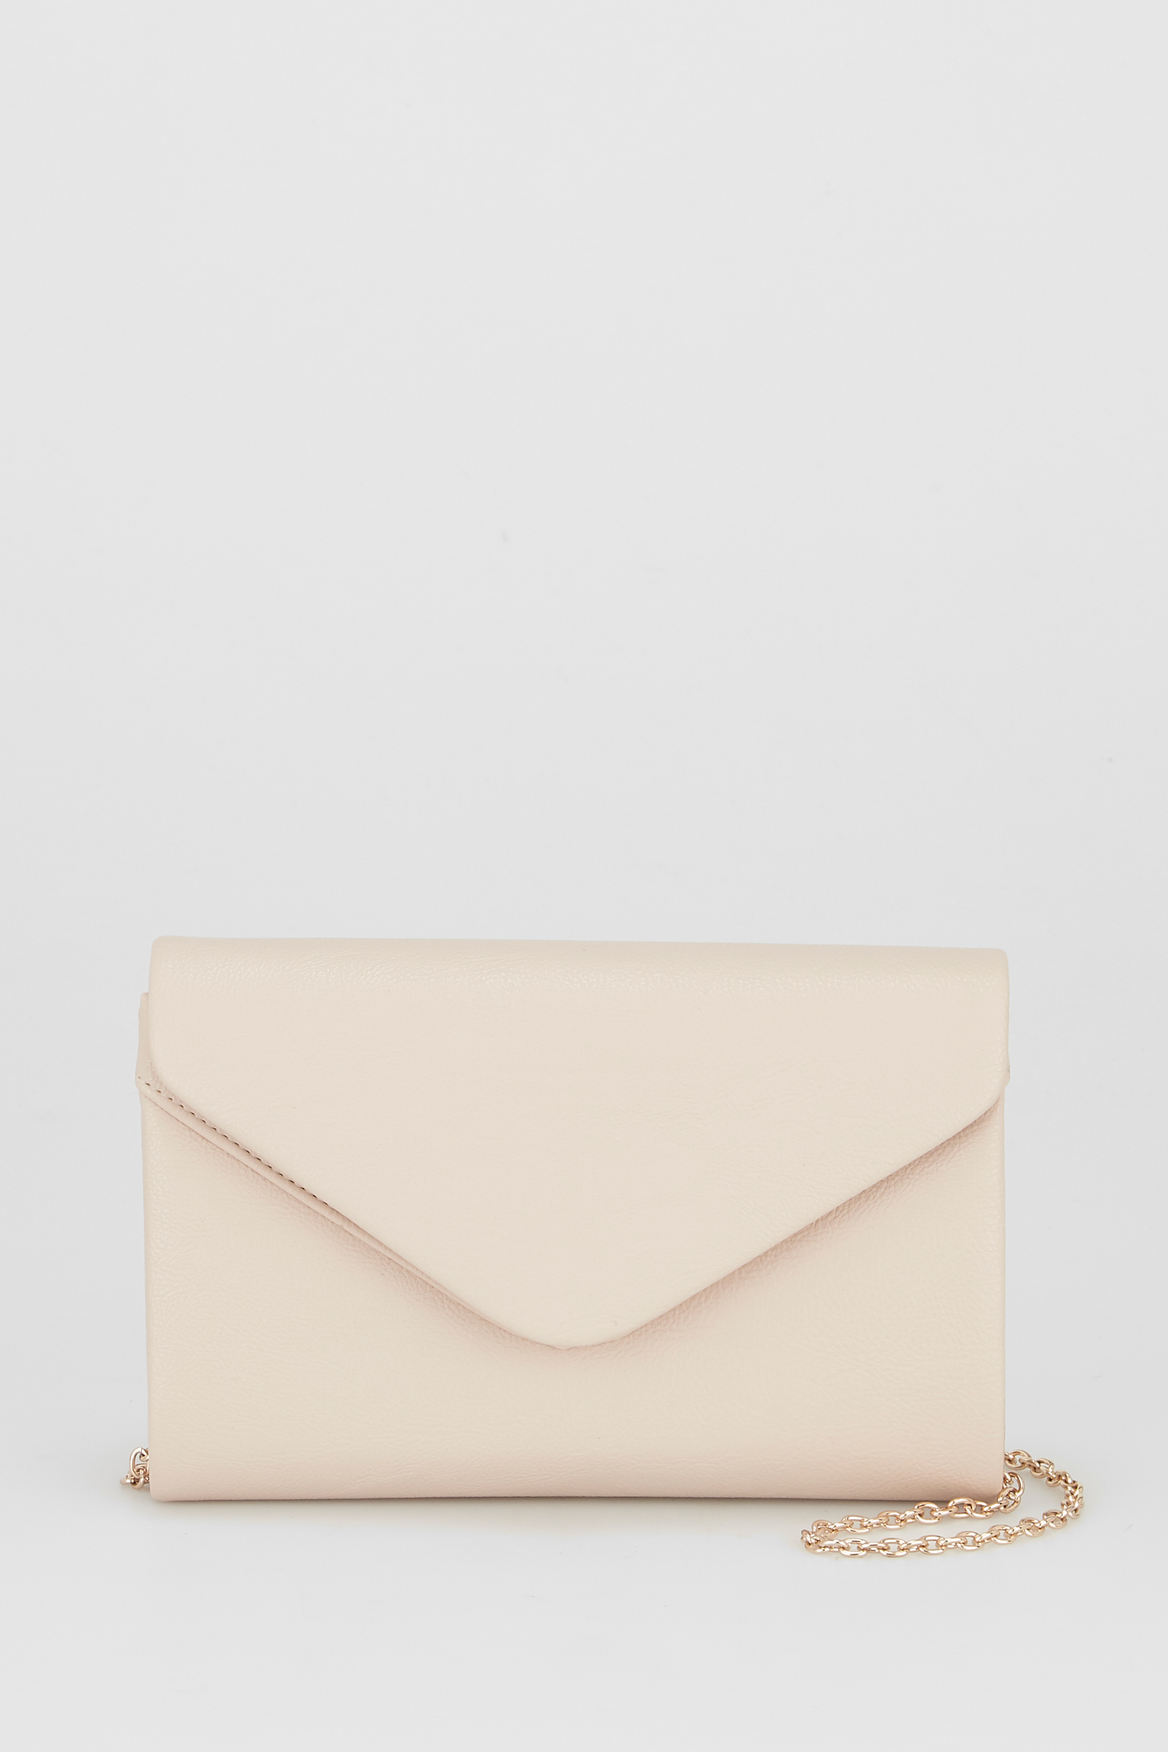 Women's Long Leather Wallet Clutch Multi Card Holder Handbags Purse Xmas  Gift US | eBay